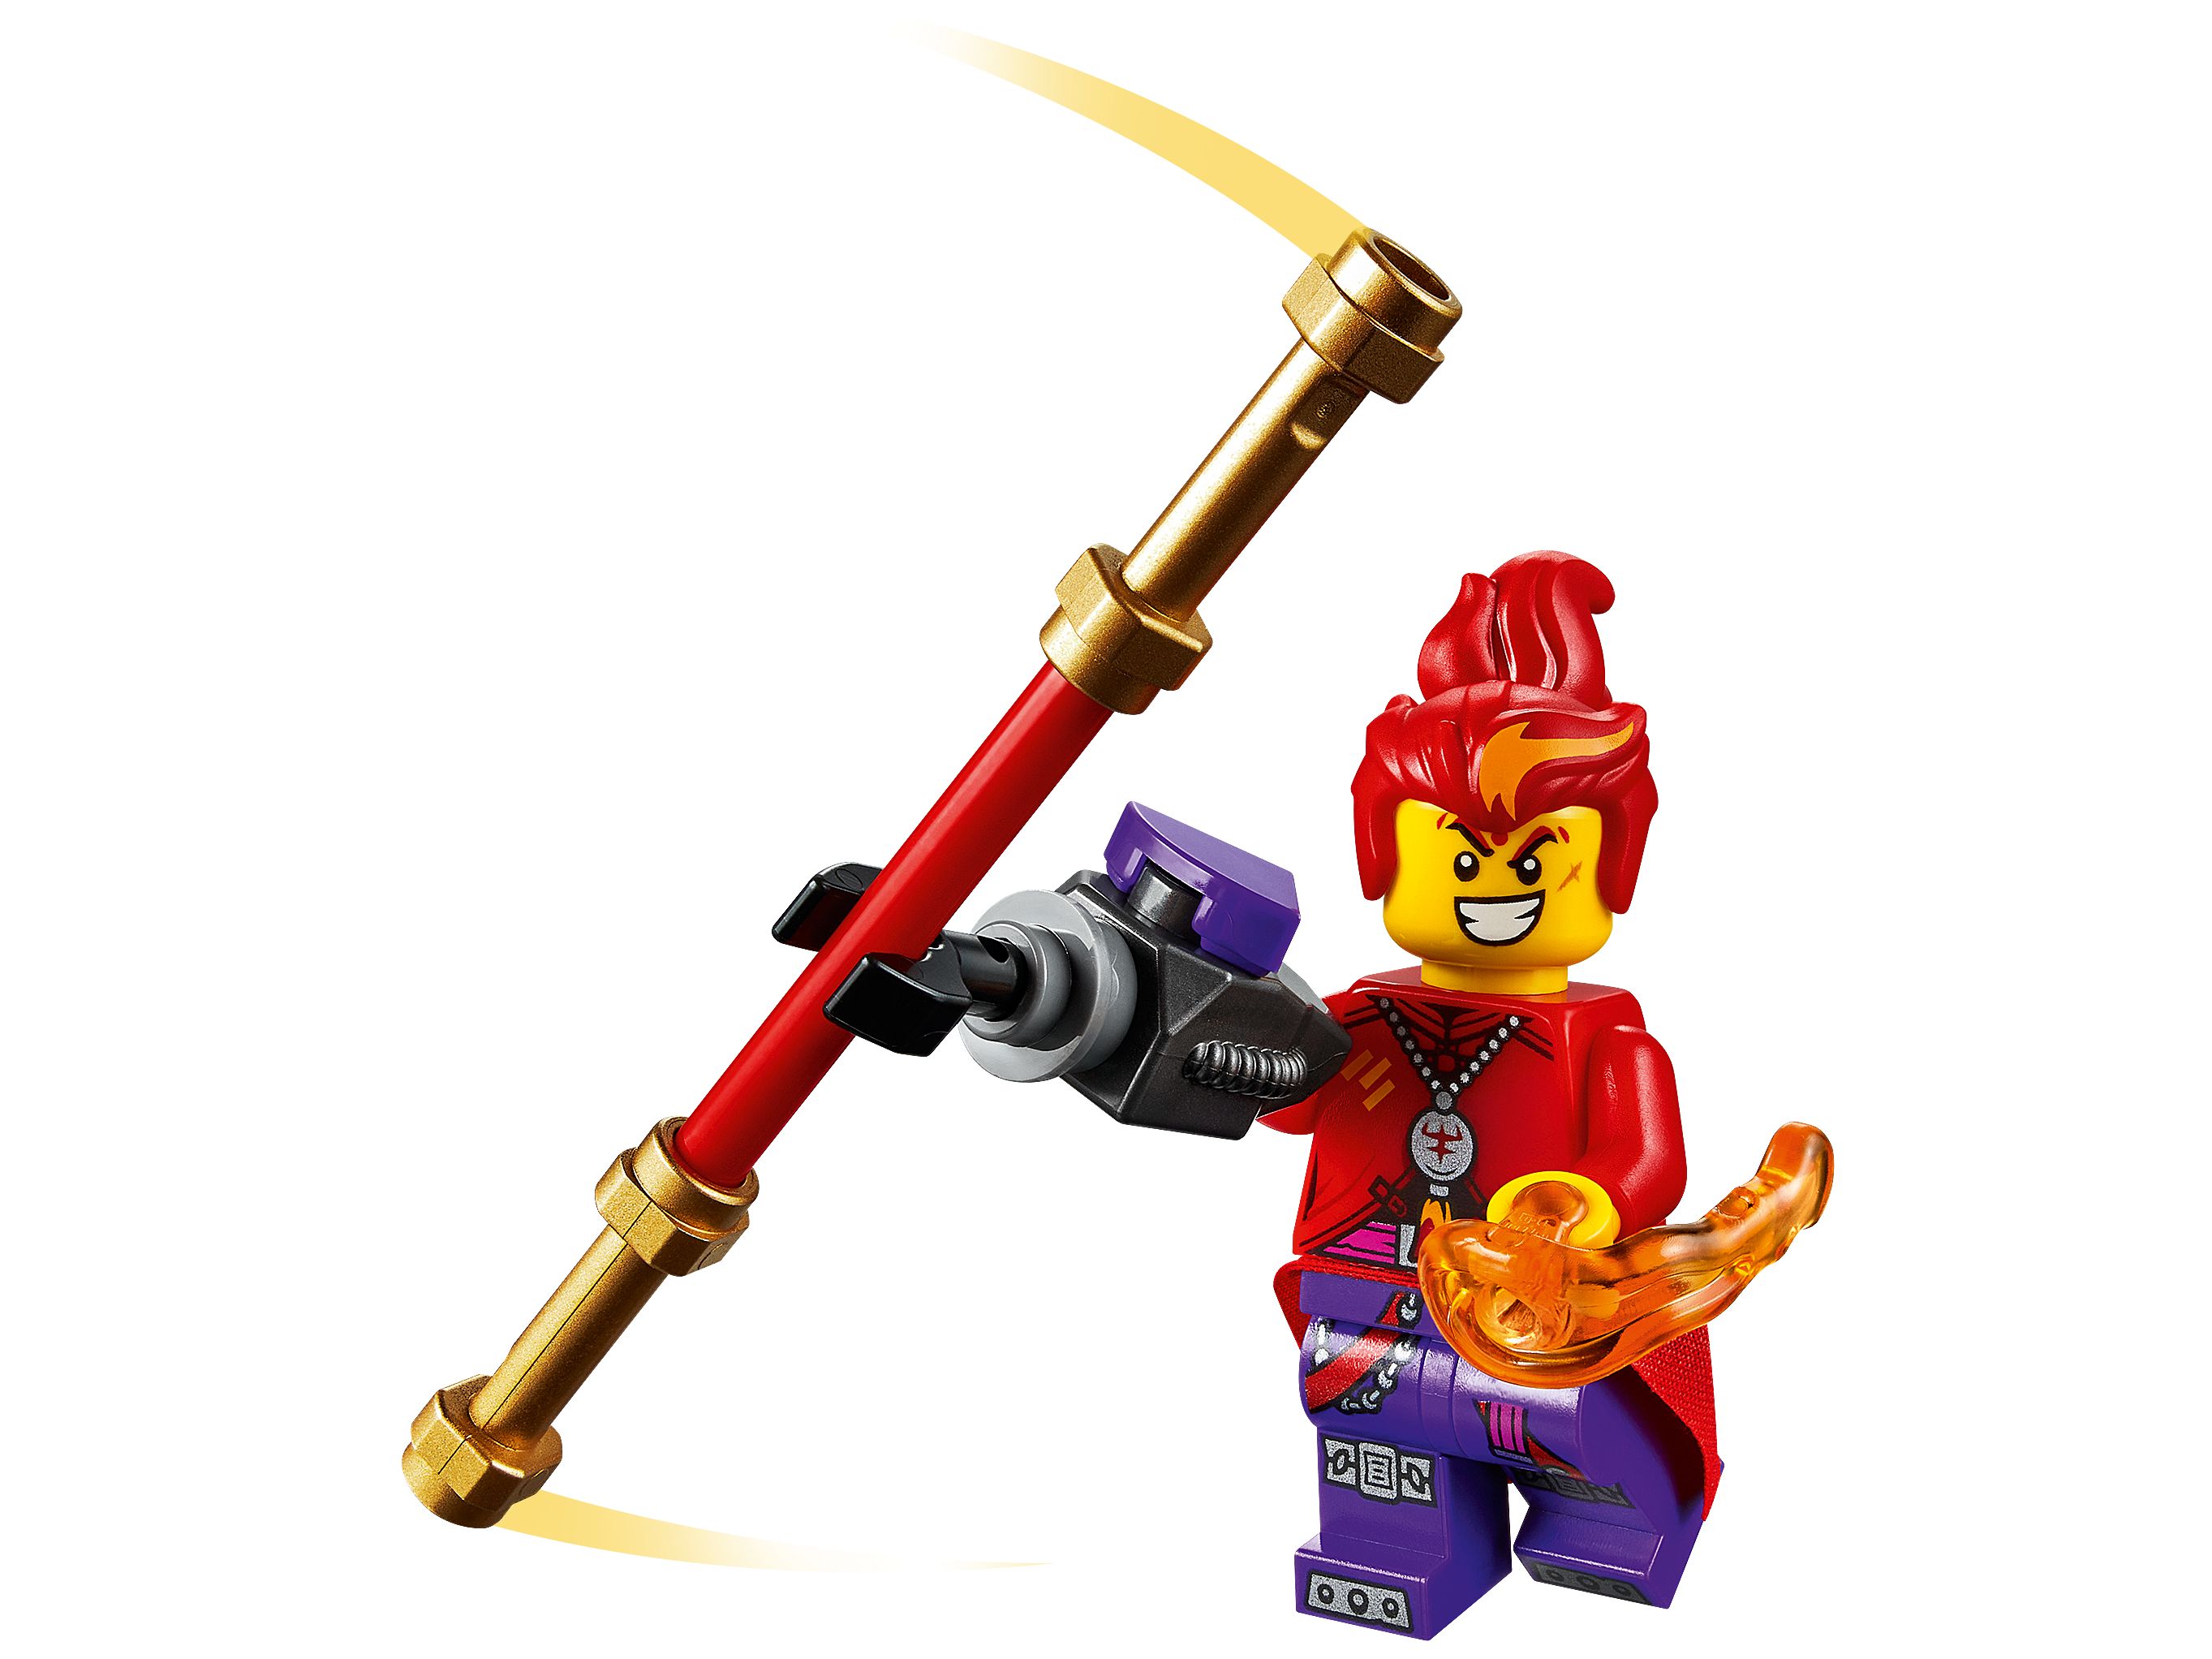 LEGO Monkie Kid 80019 Red Sons Inferno-Jet LEGO_80019_alt4.jpg